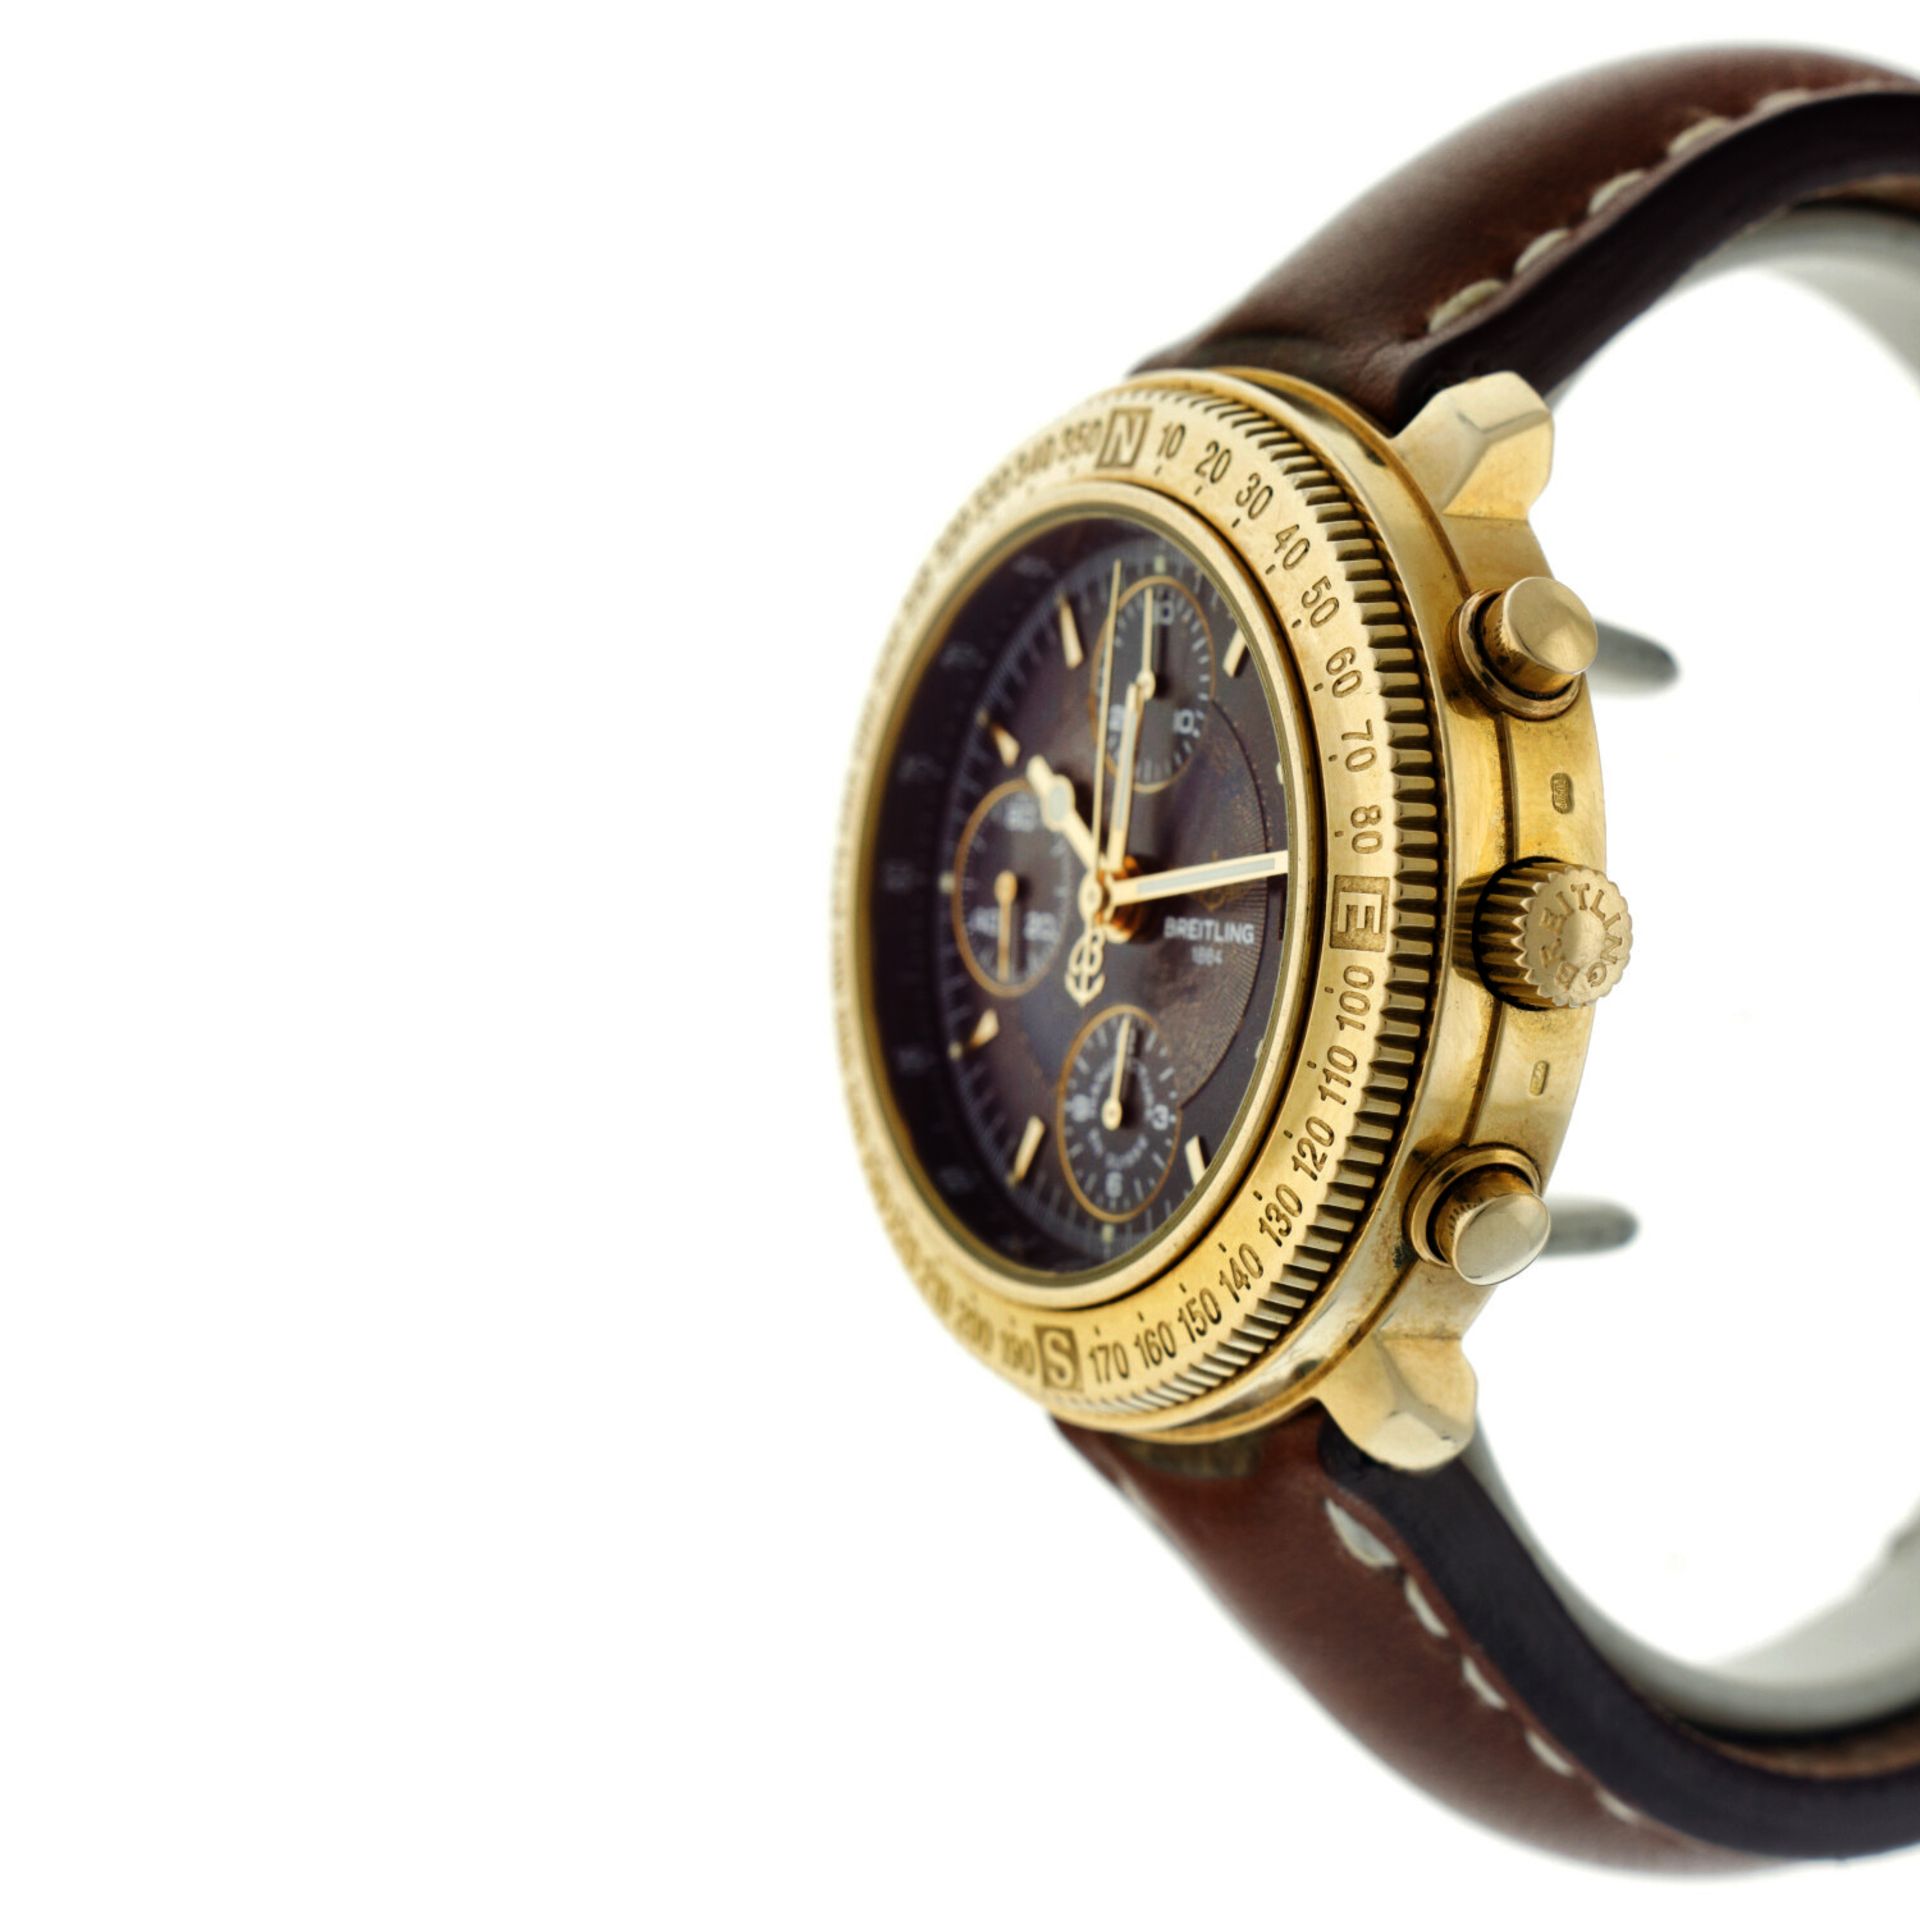 Breitling Astromat Longitude Chronograph K20405 - Men's watch - 1992. - Image 5 of 6